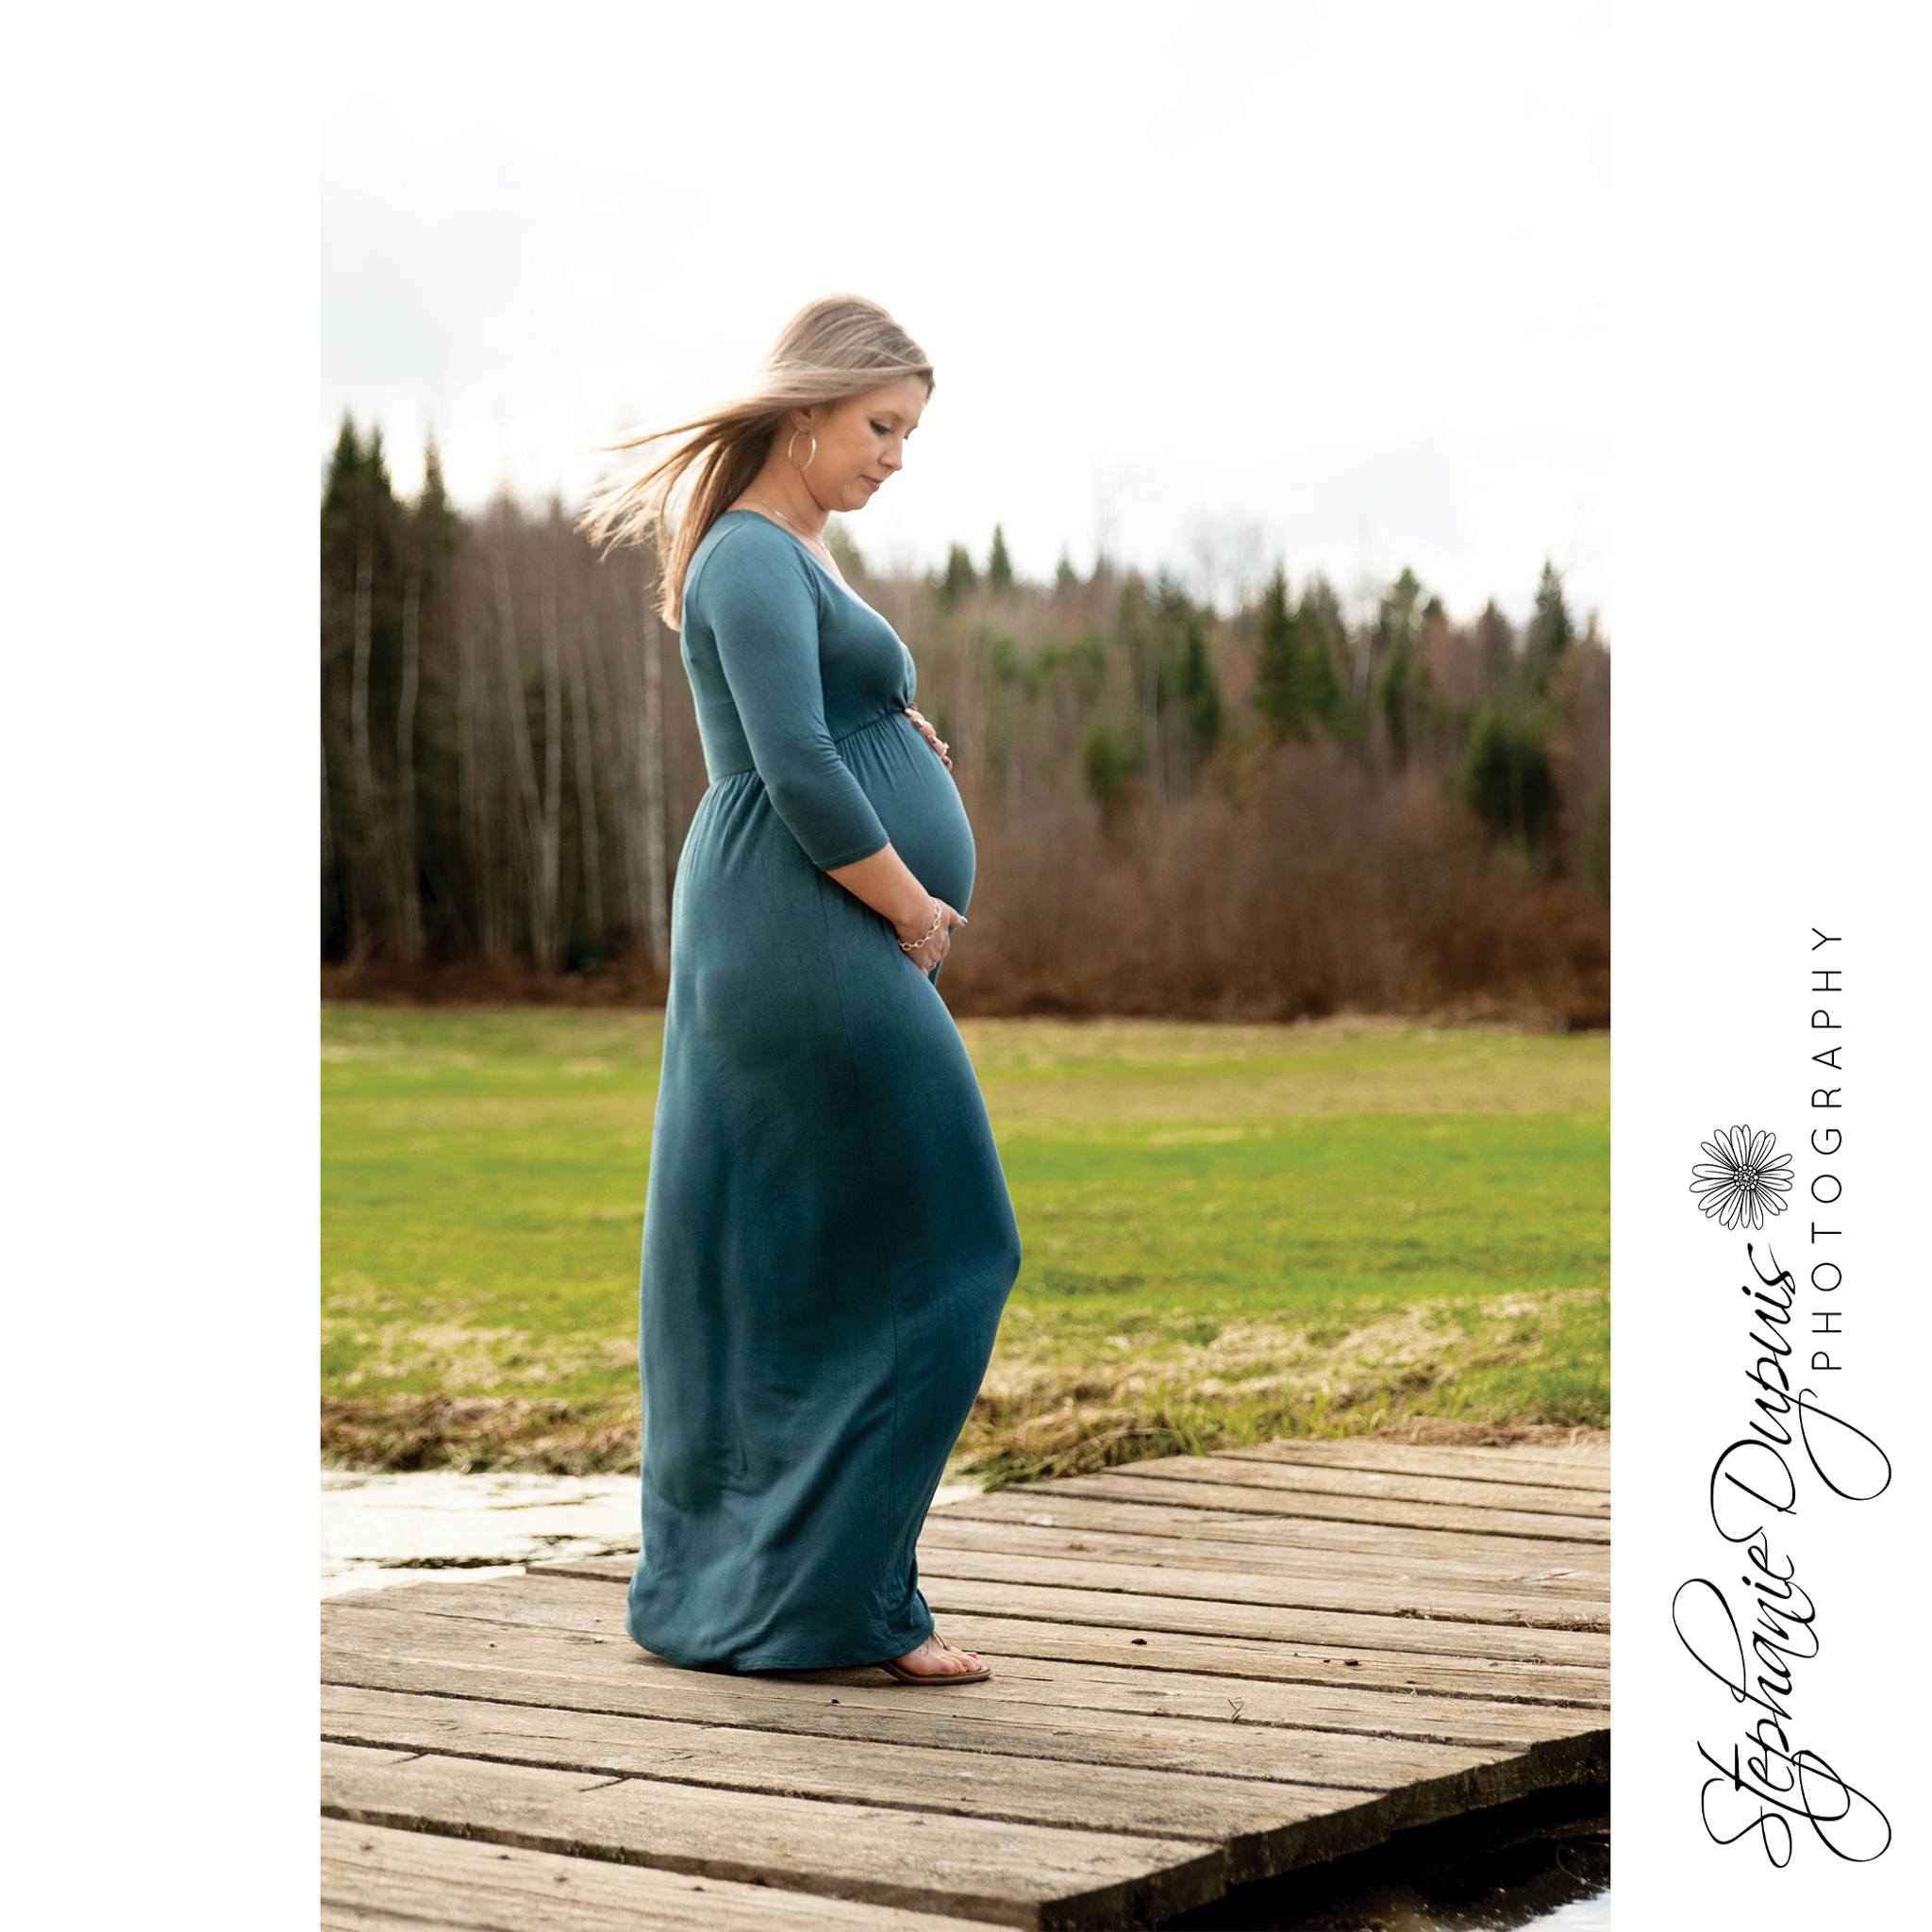 Chelsea Maternity 5 - Portfolio: Chelsea's Maternity Session